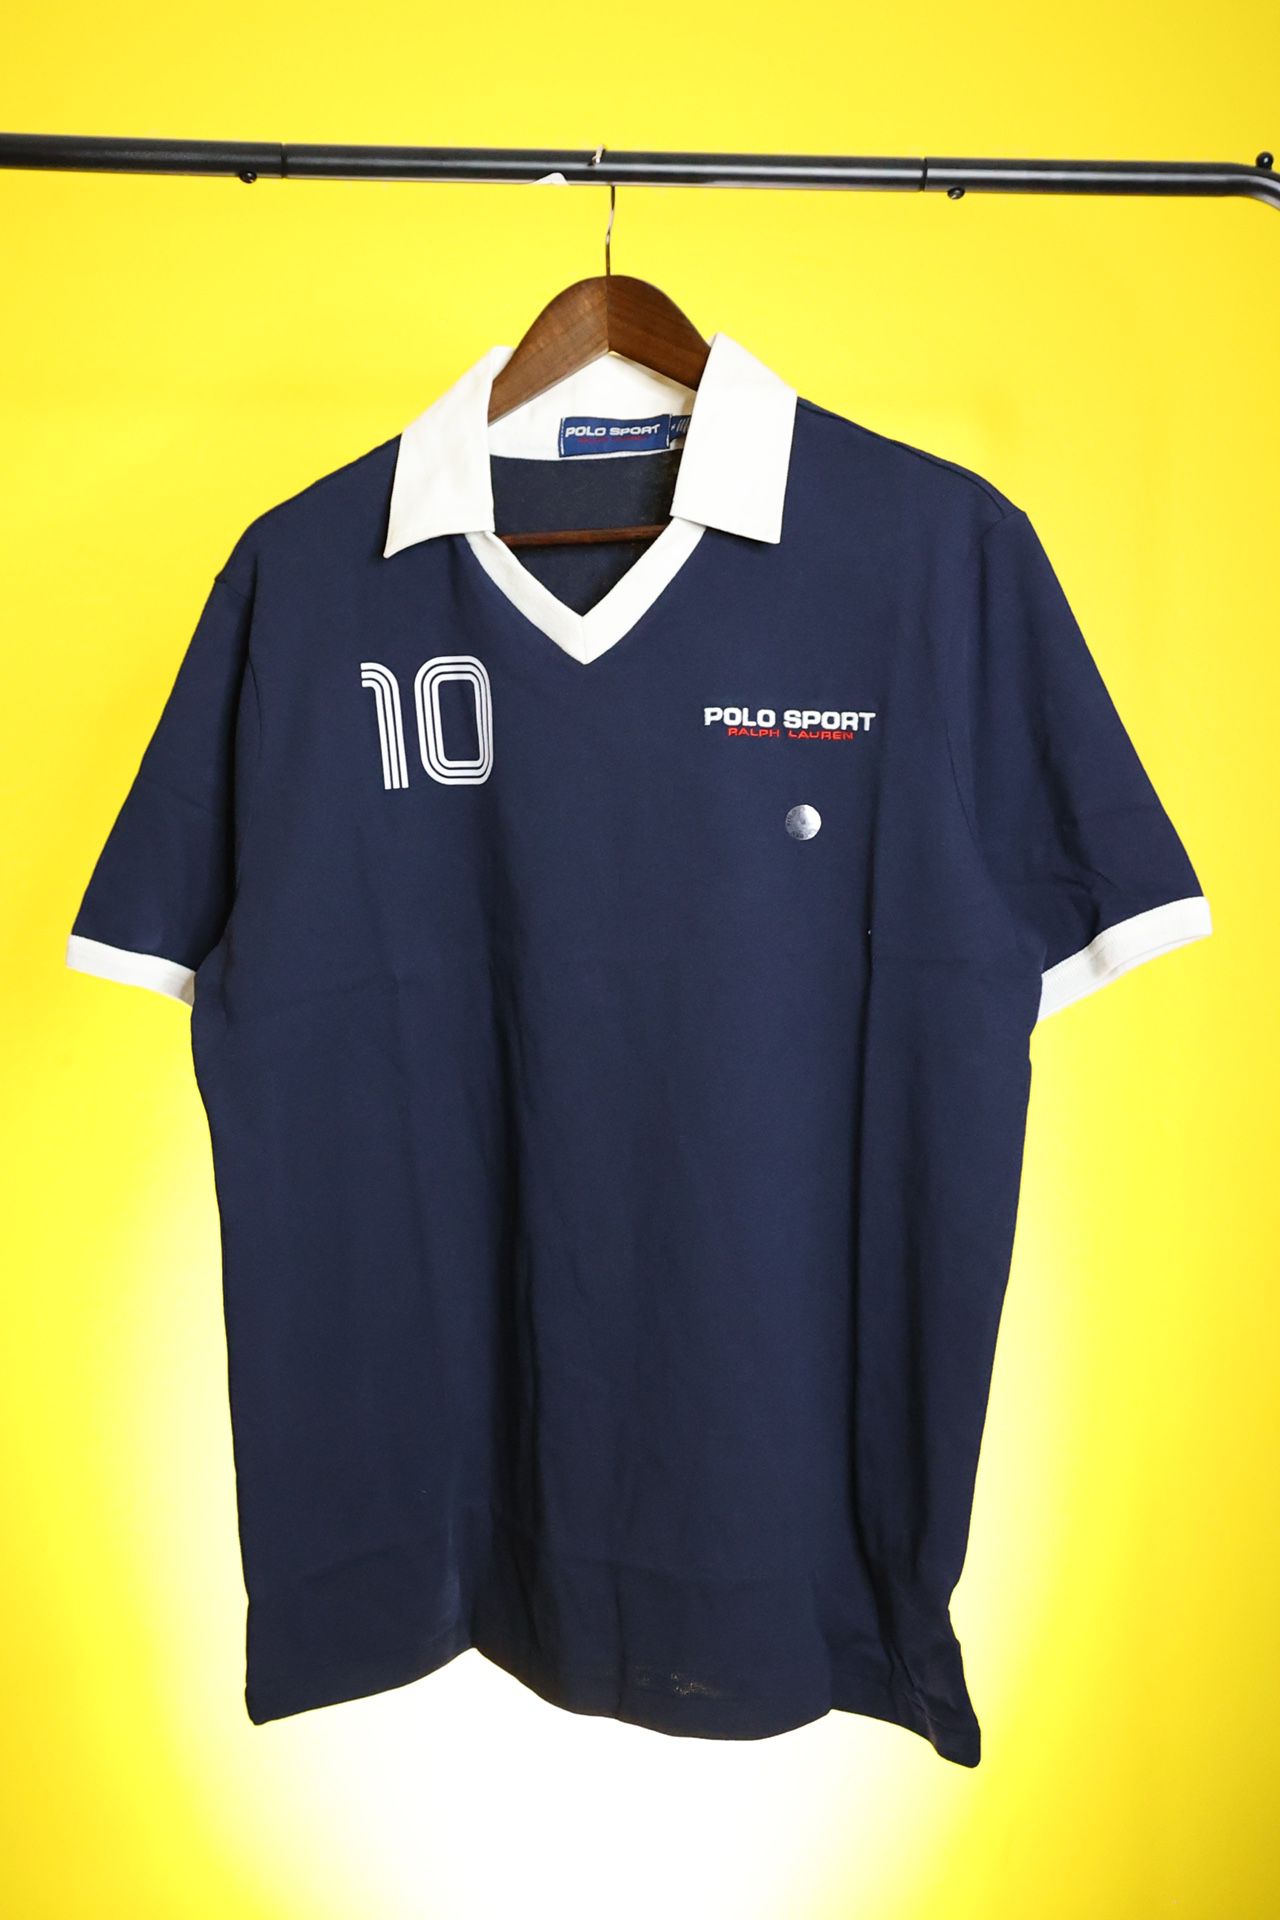 Polo sport Collar Shirt (Brand new)